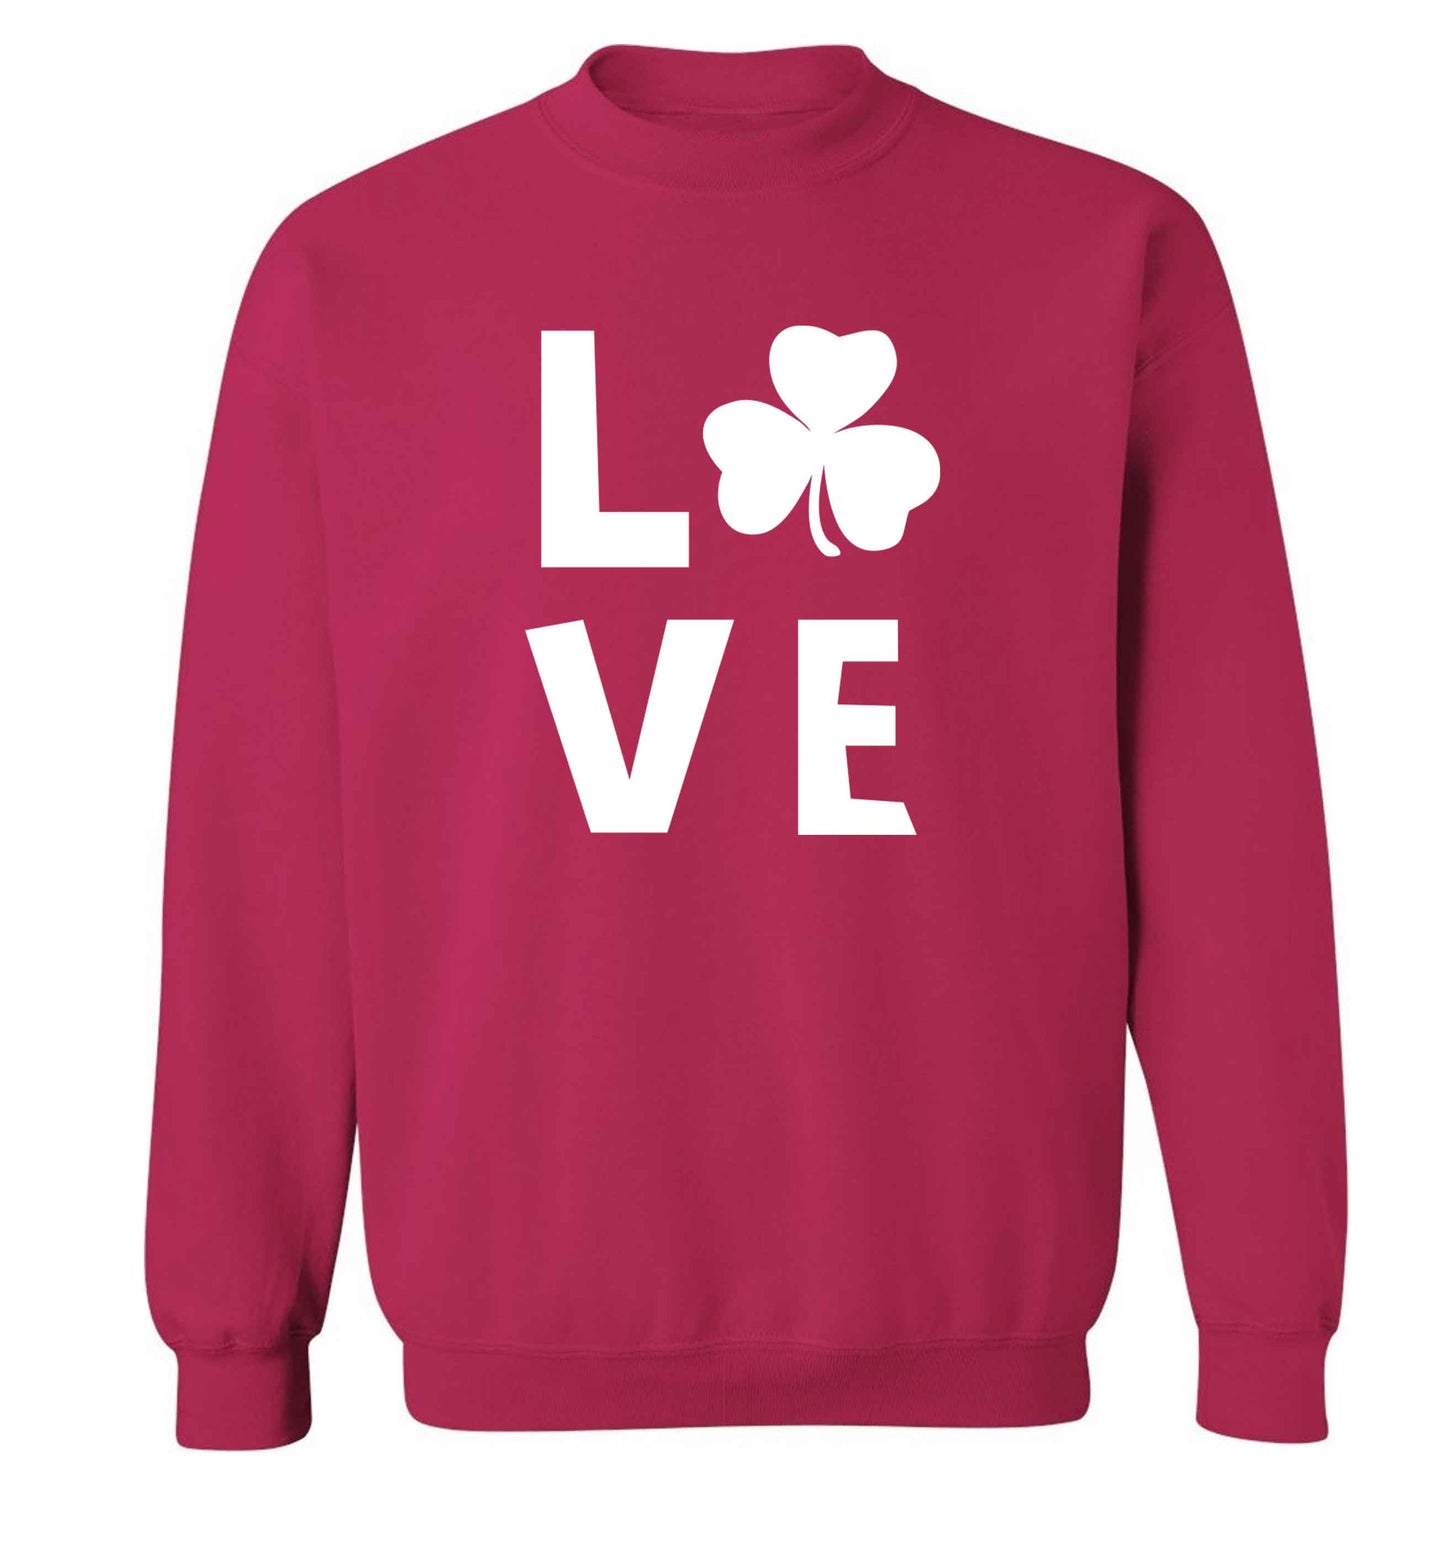 Shamrock love adult's unisex pink sweater 2XL